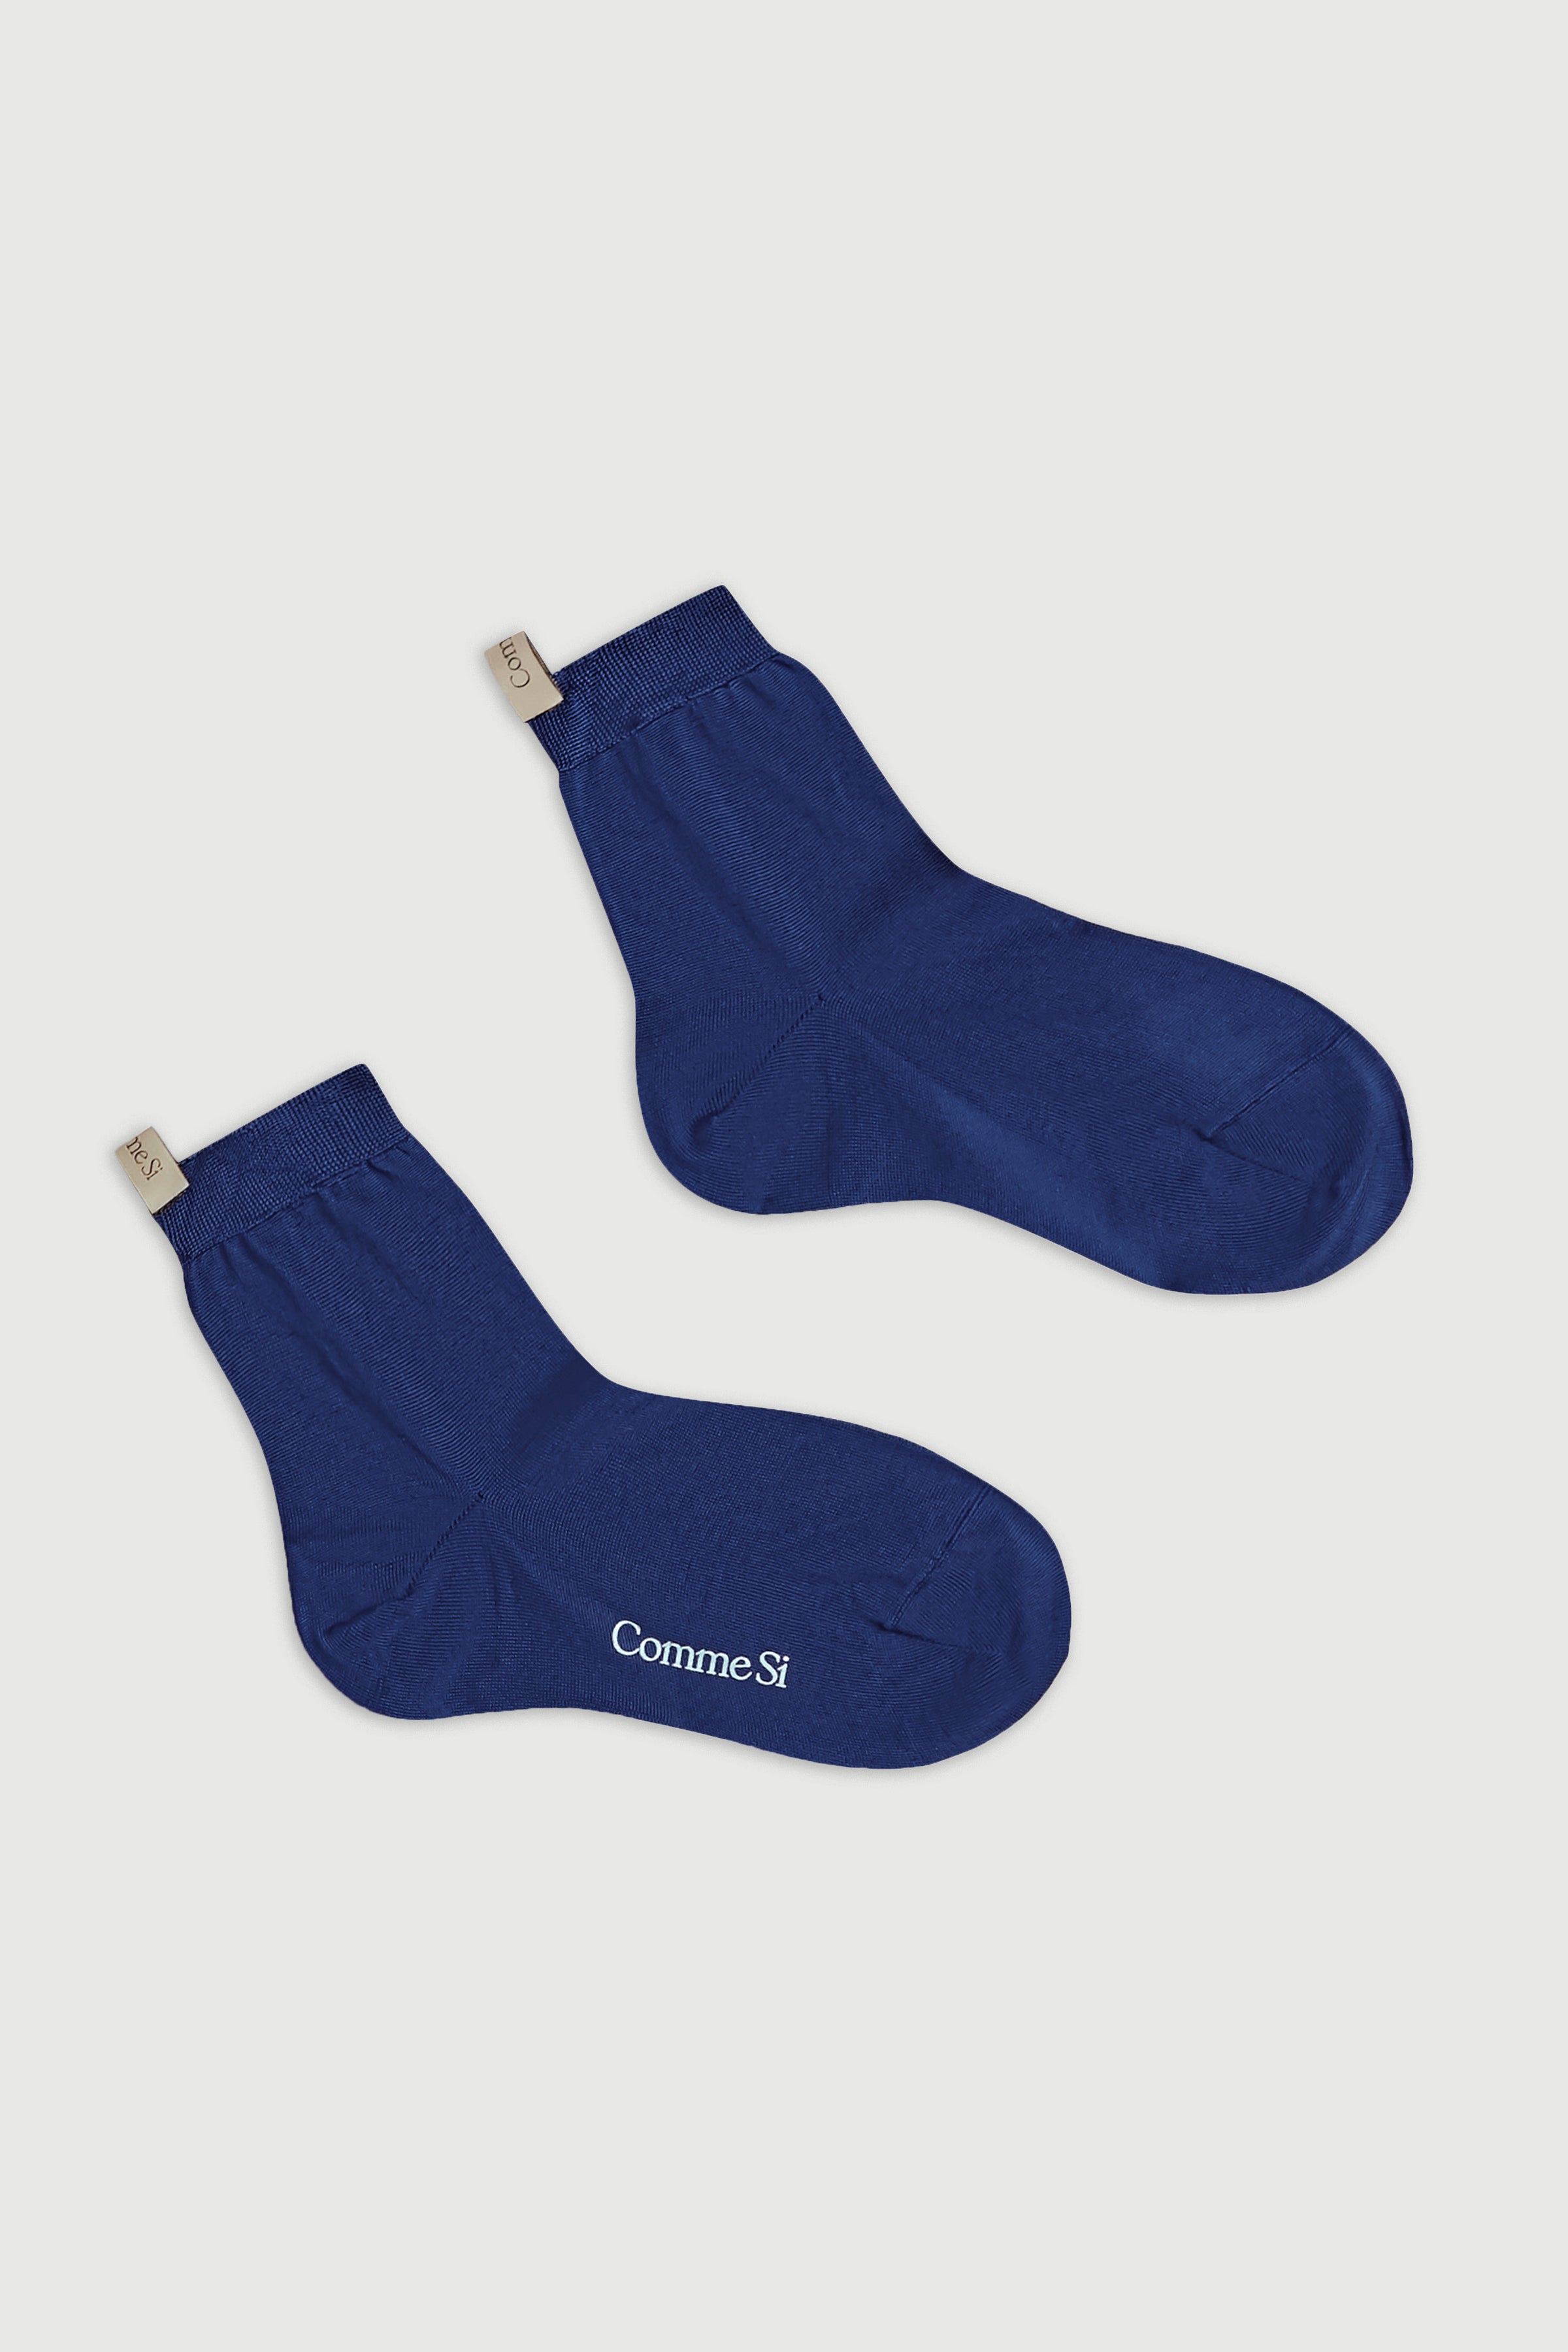 The Celeste Sock – Comme Si